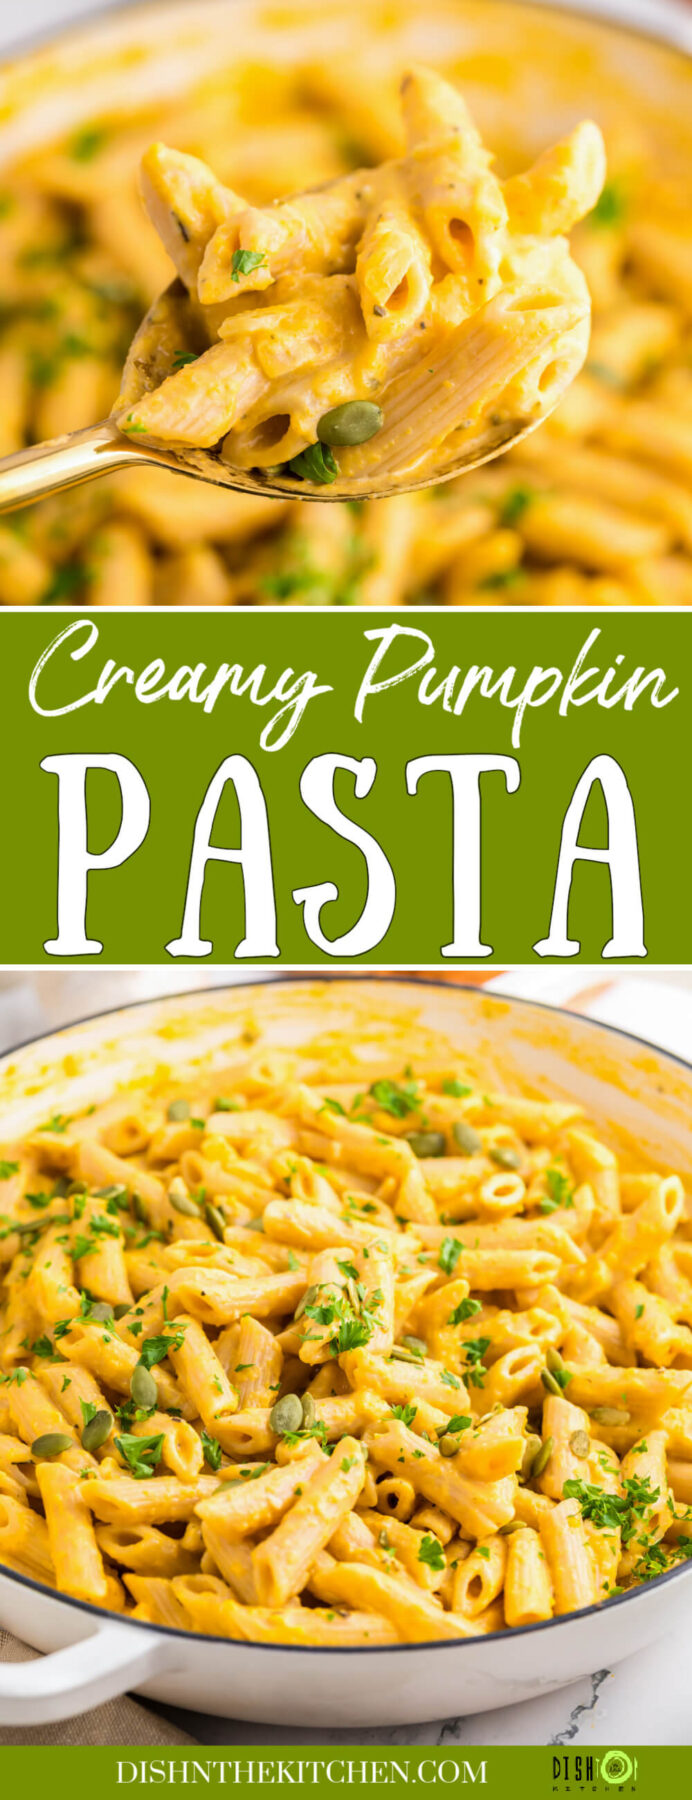 Pinterest image featuring bowls of creamy pumpkin pasta sauce on penne pasta.